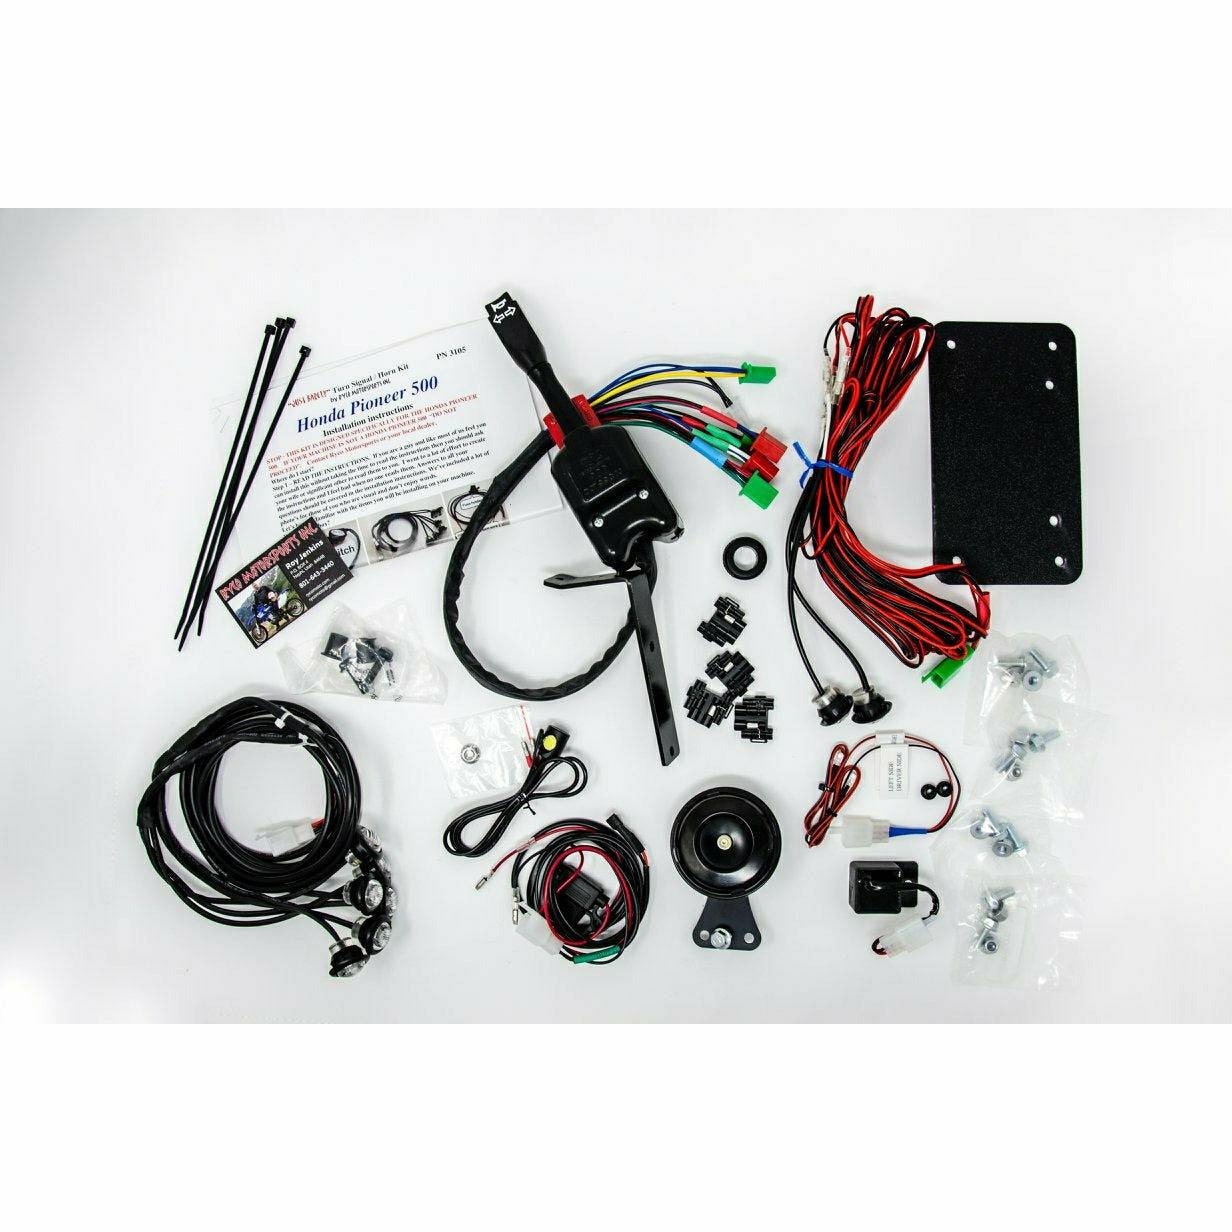 RYCO Honda Pioneer 500 Turn Signal/Horn Kit